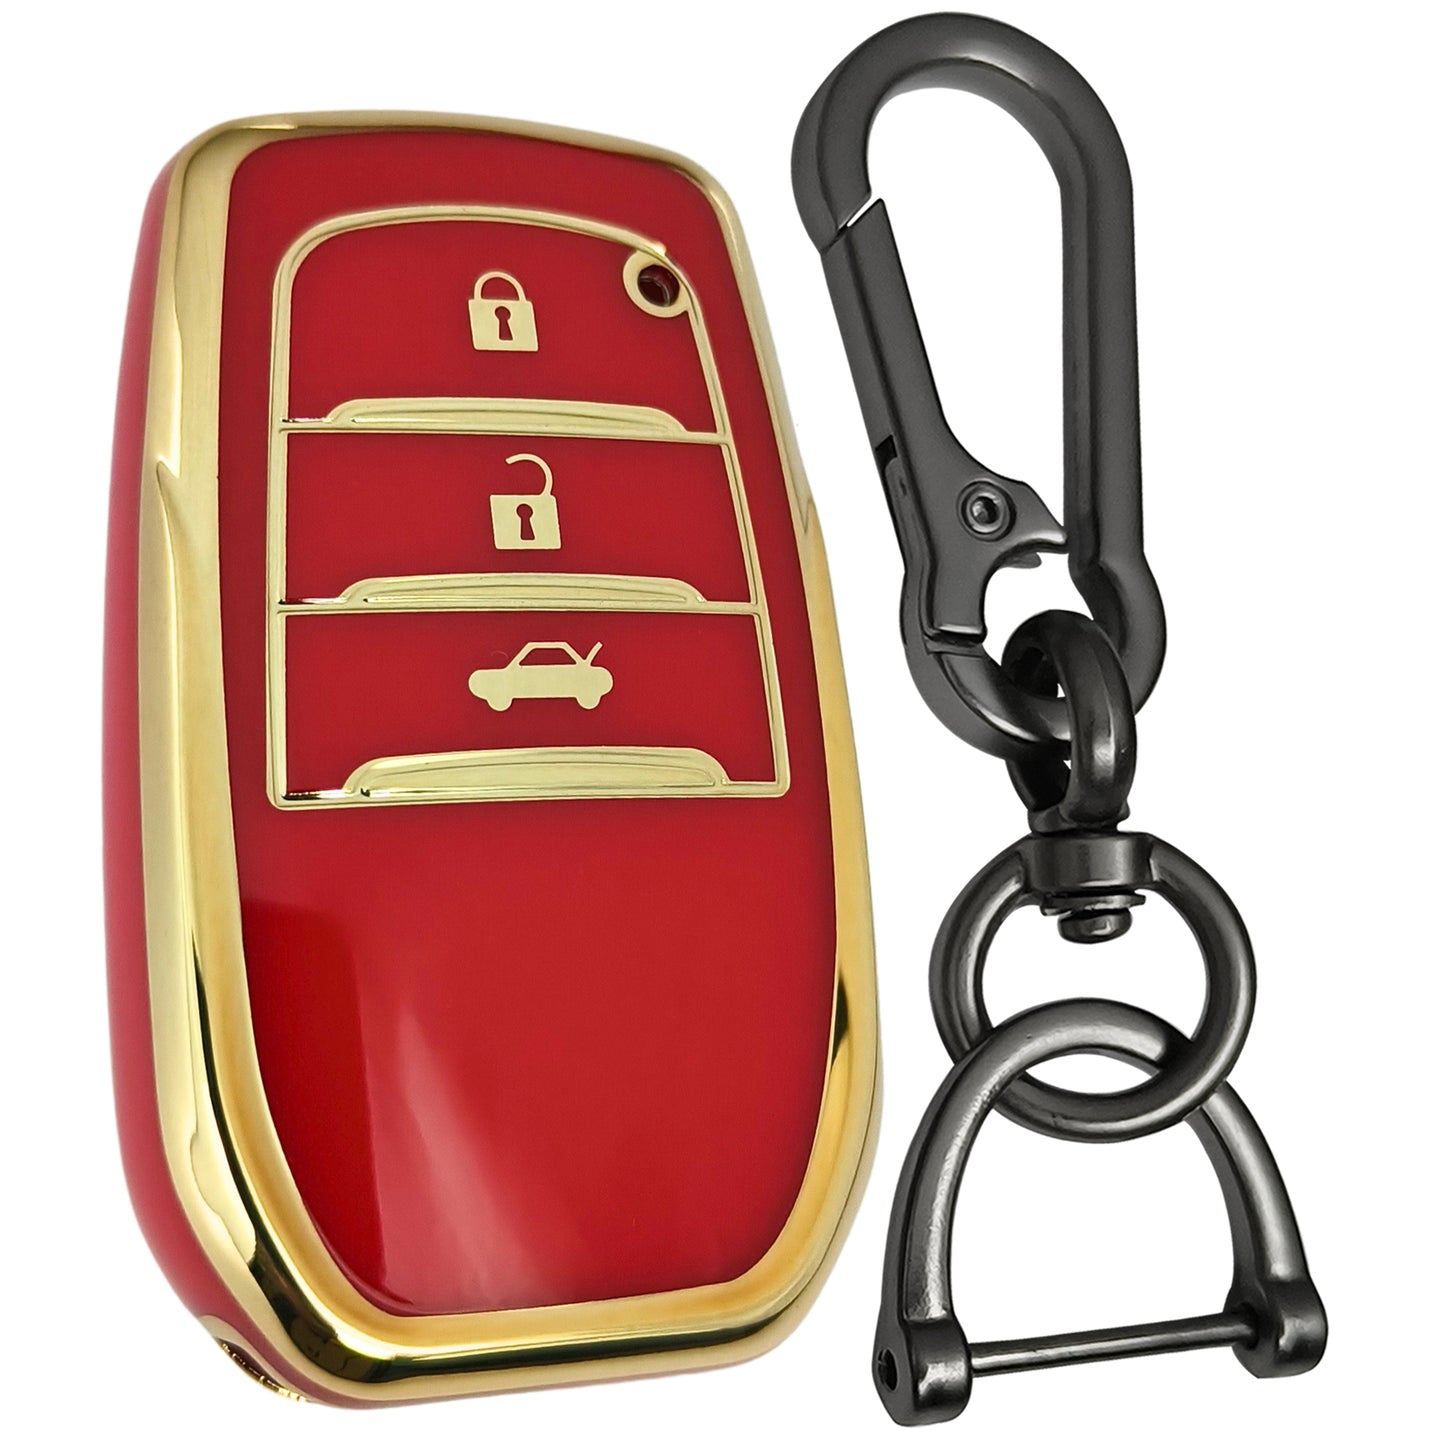 toyota fortuner innova crysta 3b smart tpu red key case keychain